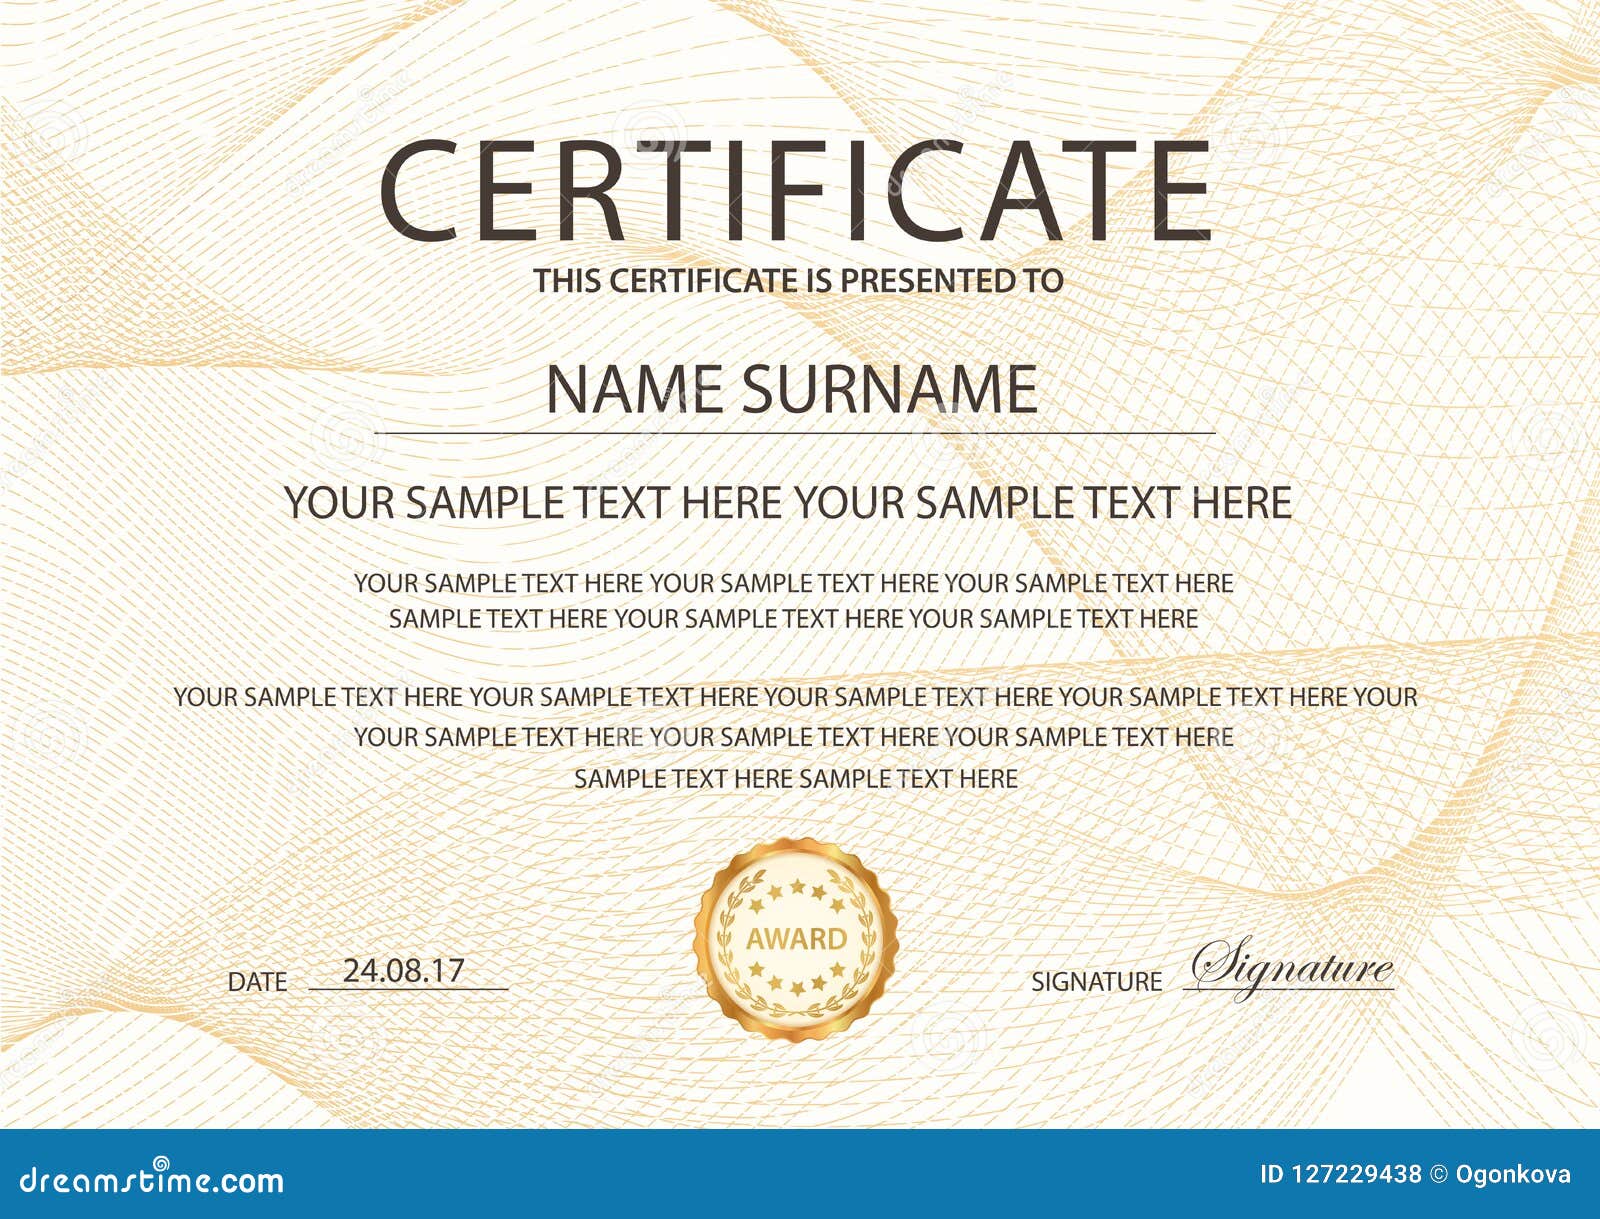 Certificate Vector Template. Formal Secured Border Guilloche In Formal Certificate Of Appreciation Template